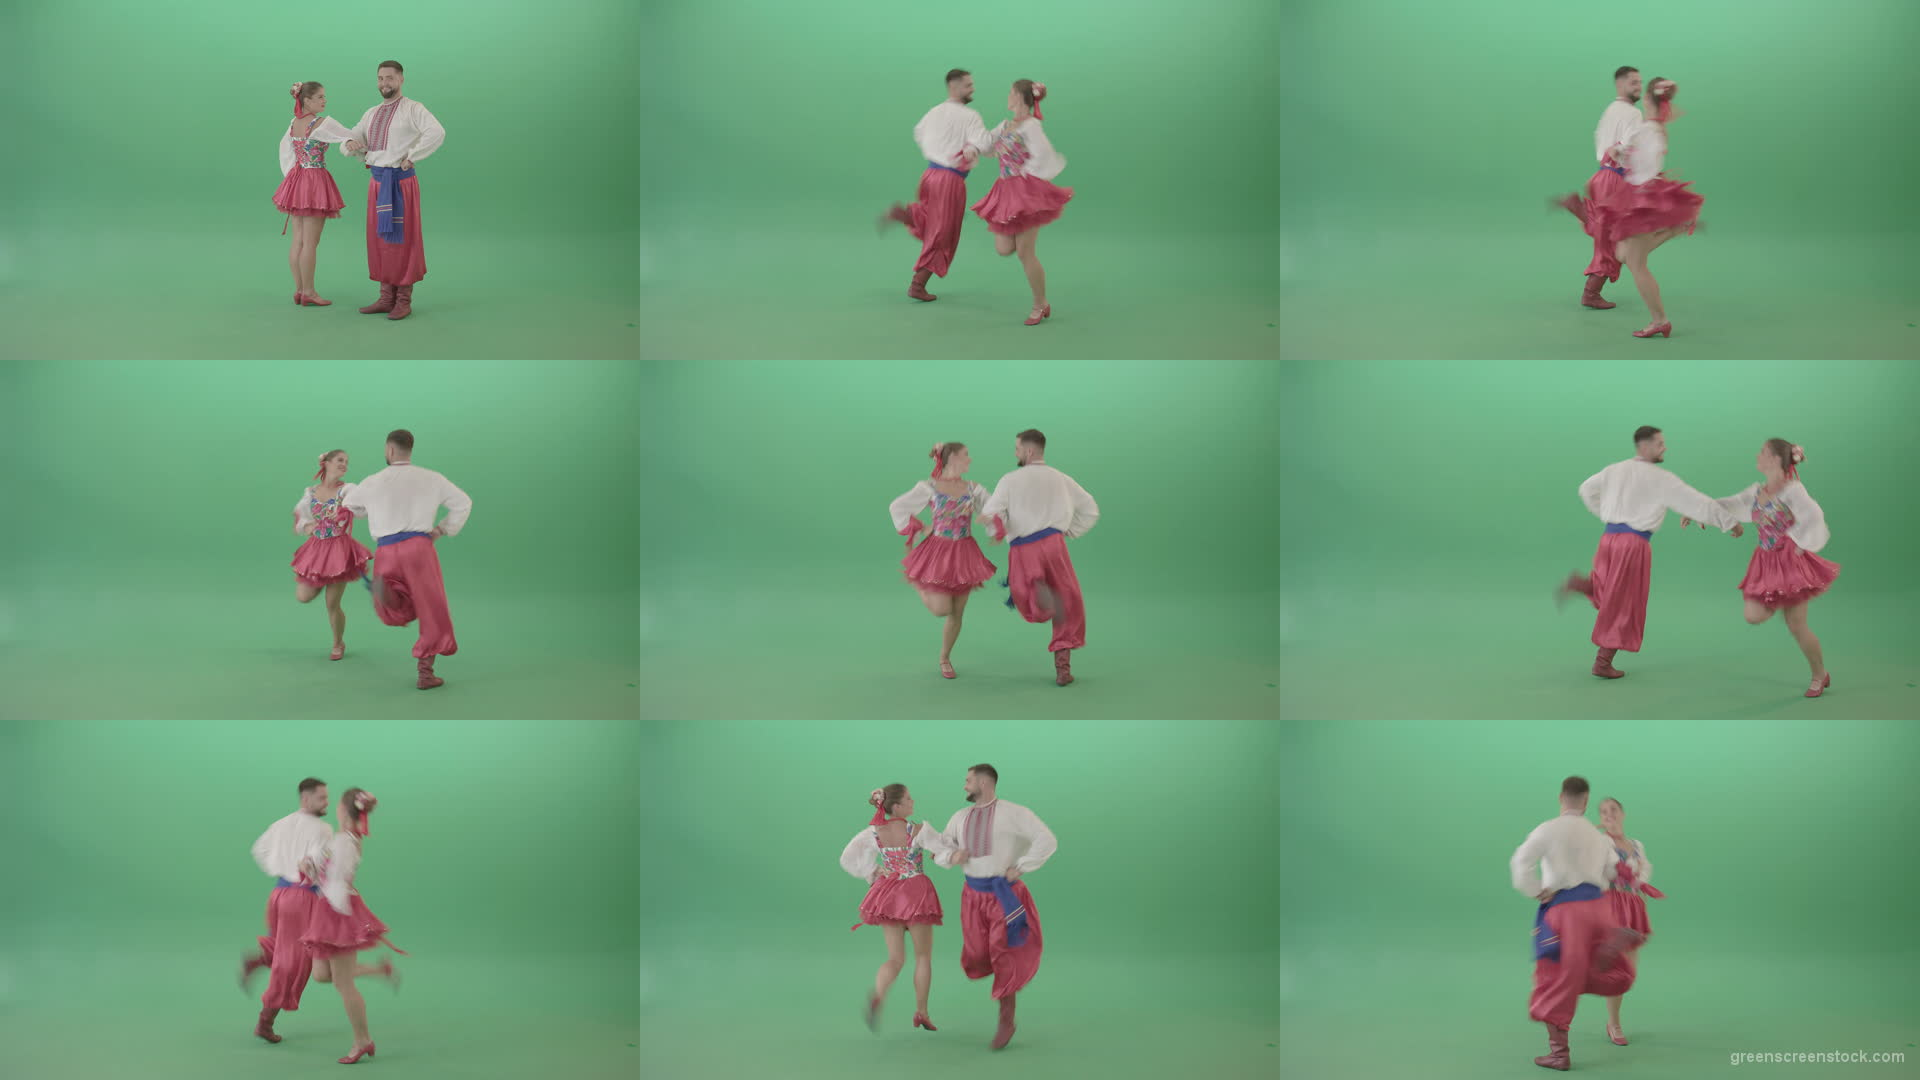 Ukraine-national-dancing-couple-shows-folk-dance-4K-Video-Footage-1920 Green Screen Stock